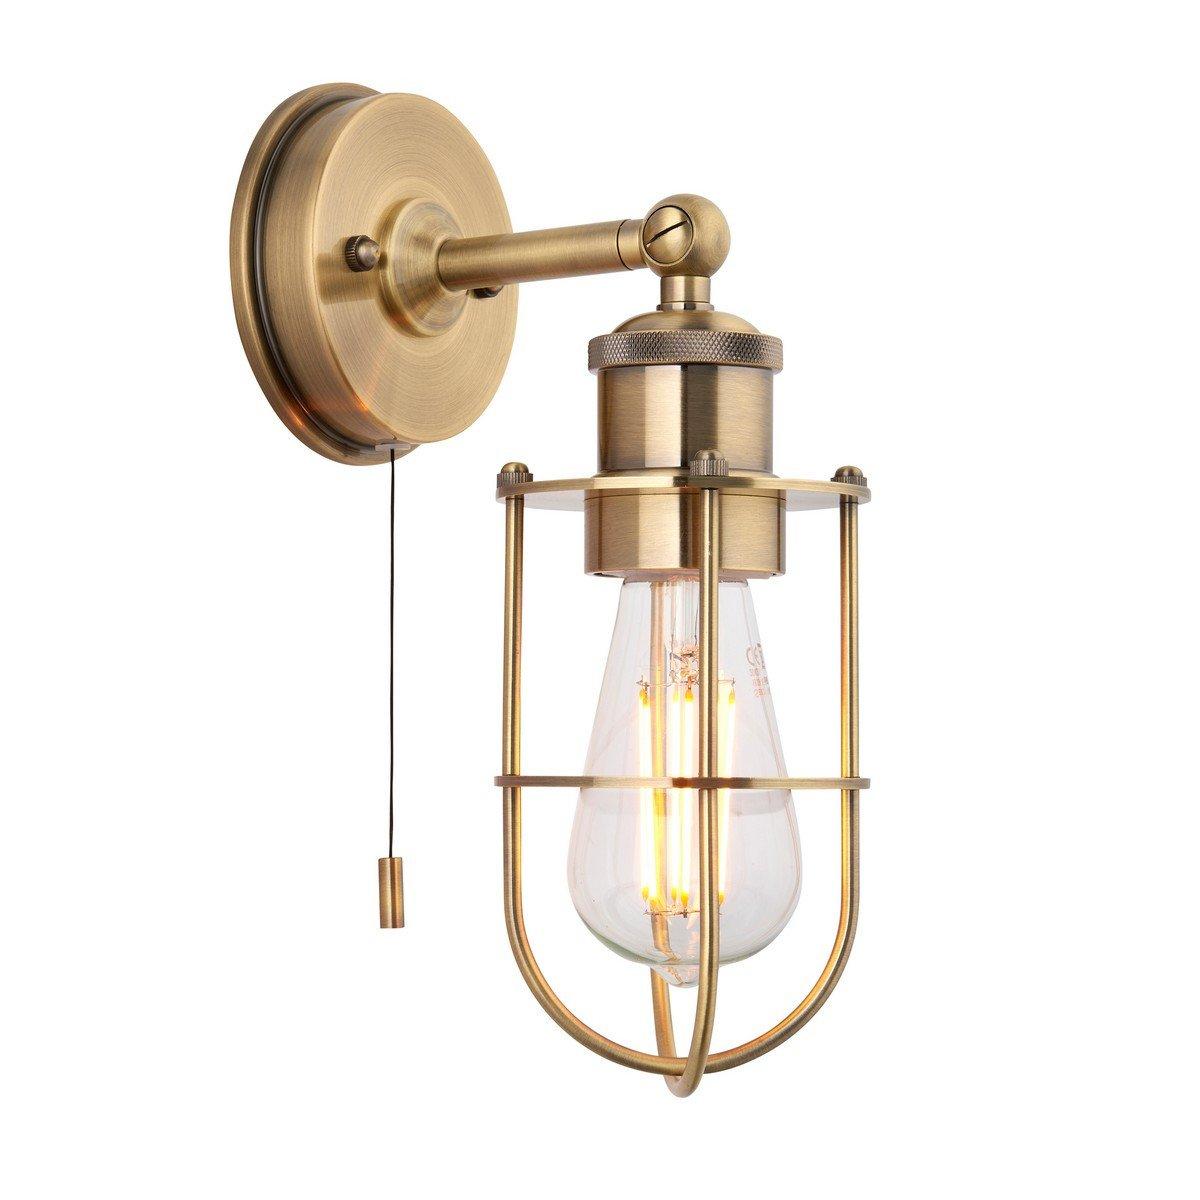 Treviso Bathroom Metal Wall Lamp Antique Brass Plate IP44